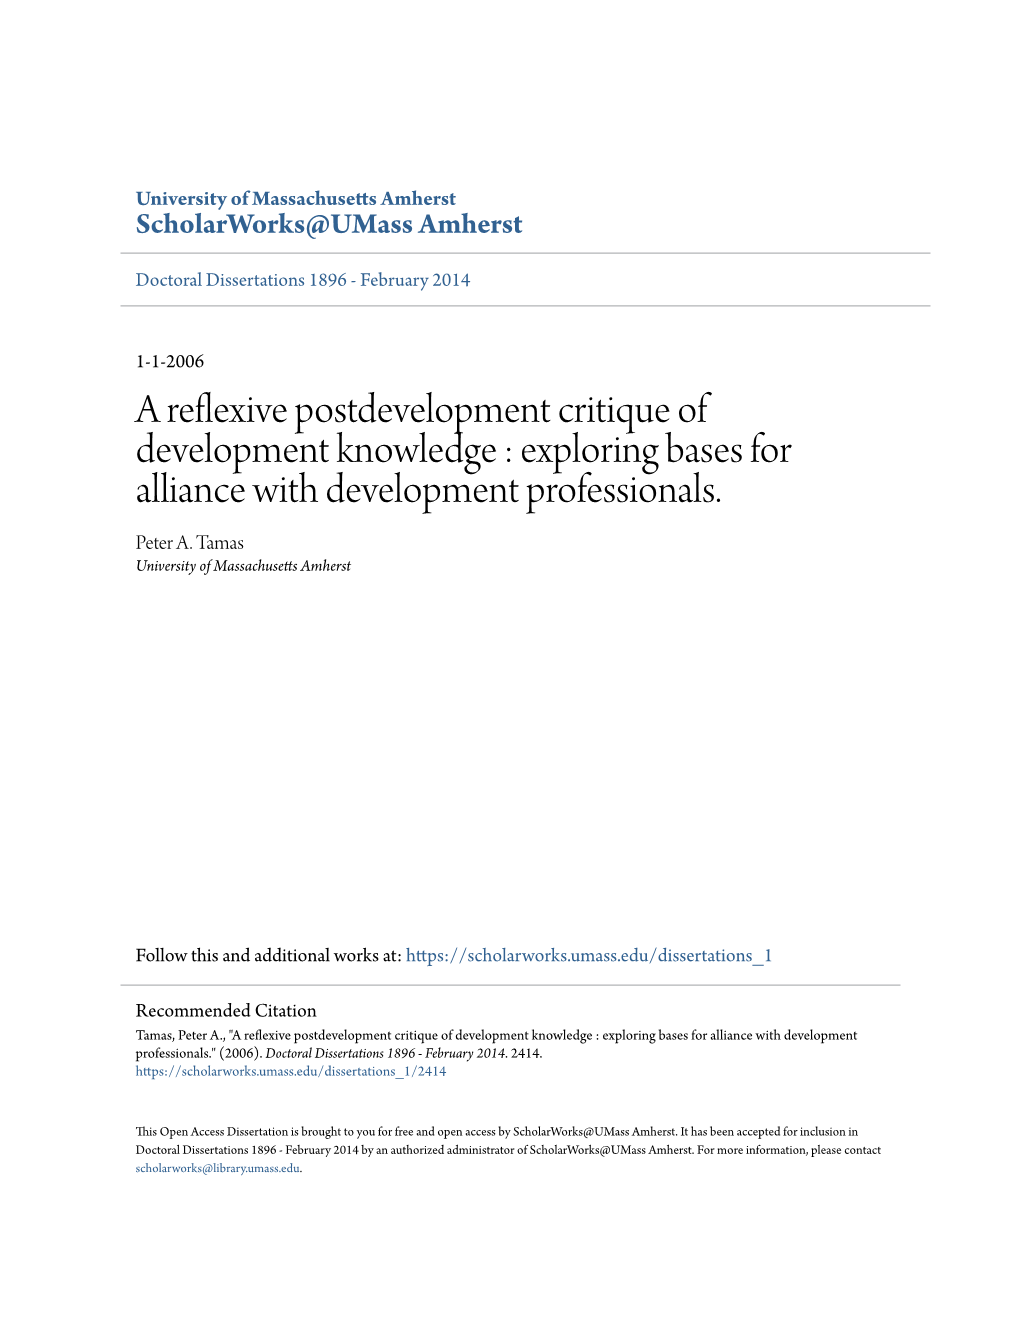 A Reflexive Postdevelopment Critique of Development Knowledge : Exploring Bases for Alliance with Development Professionals